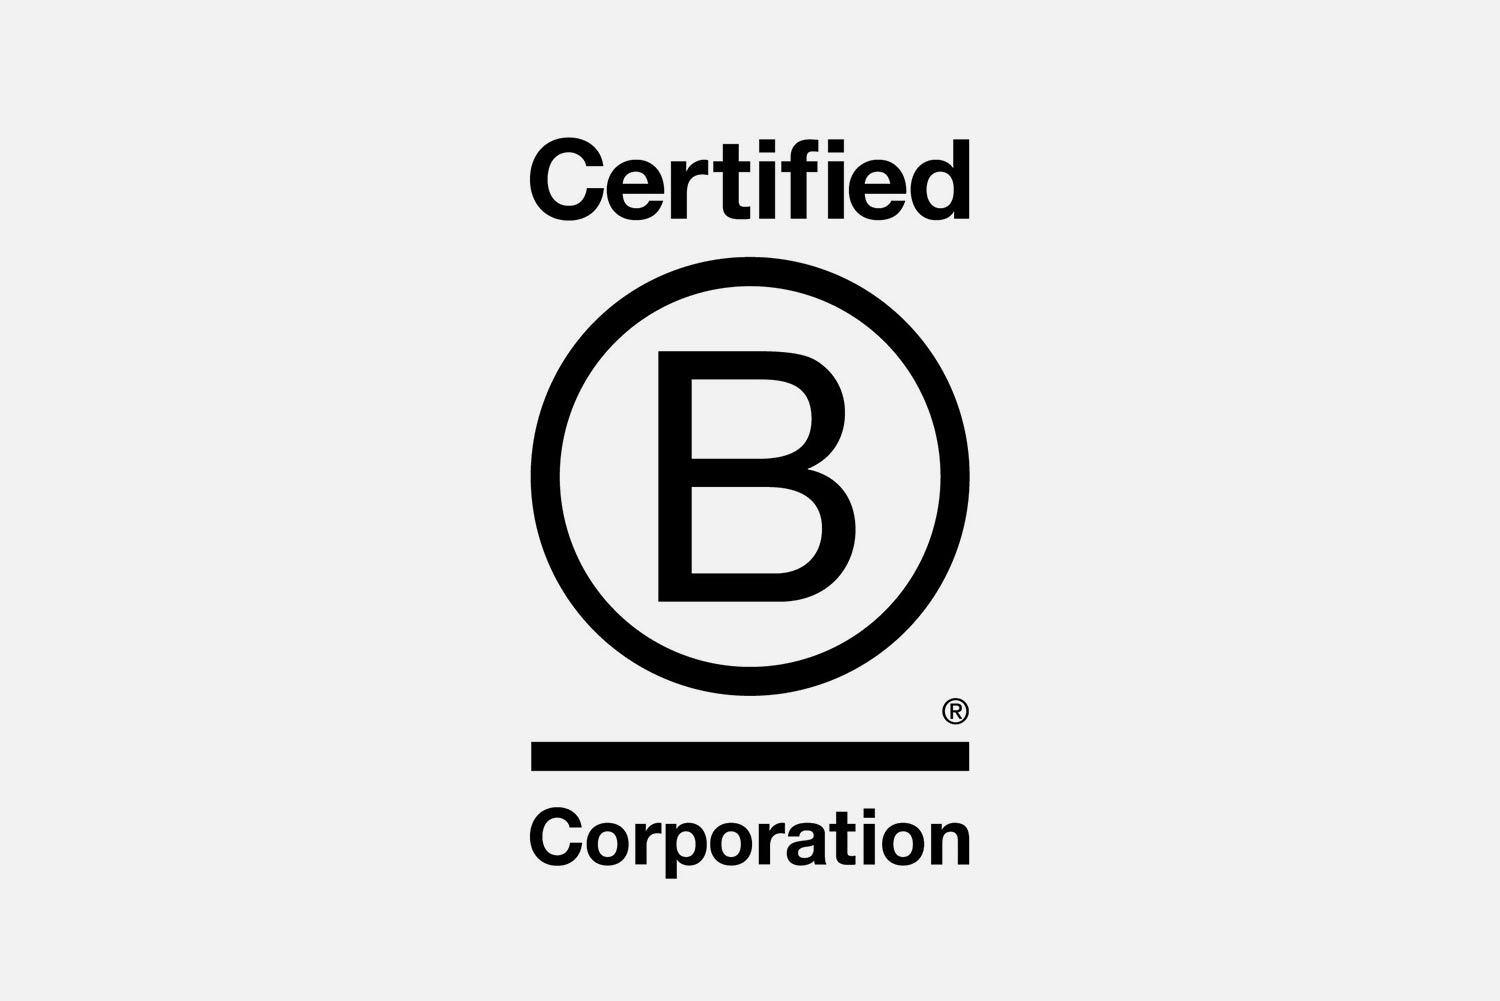 A certified B Corp